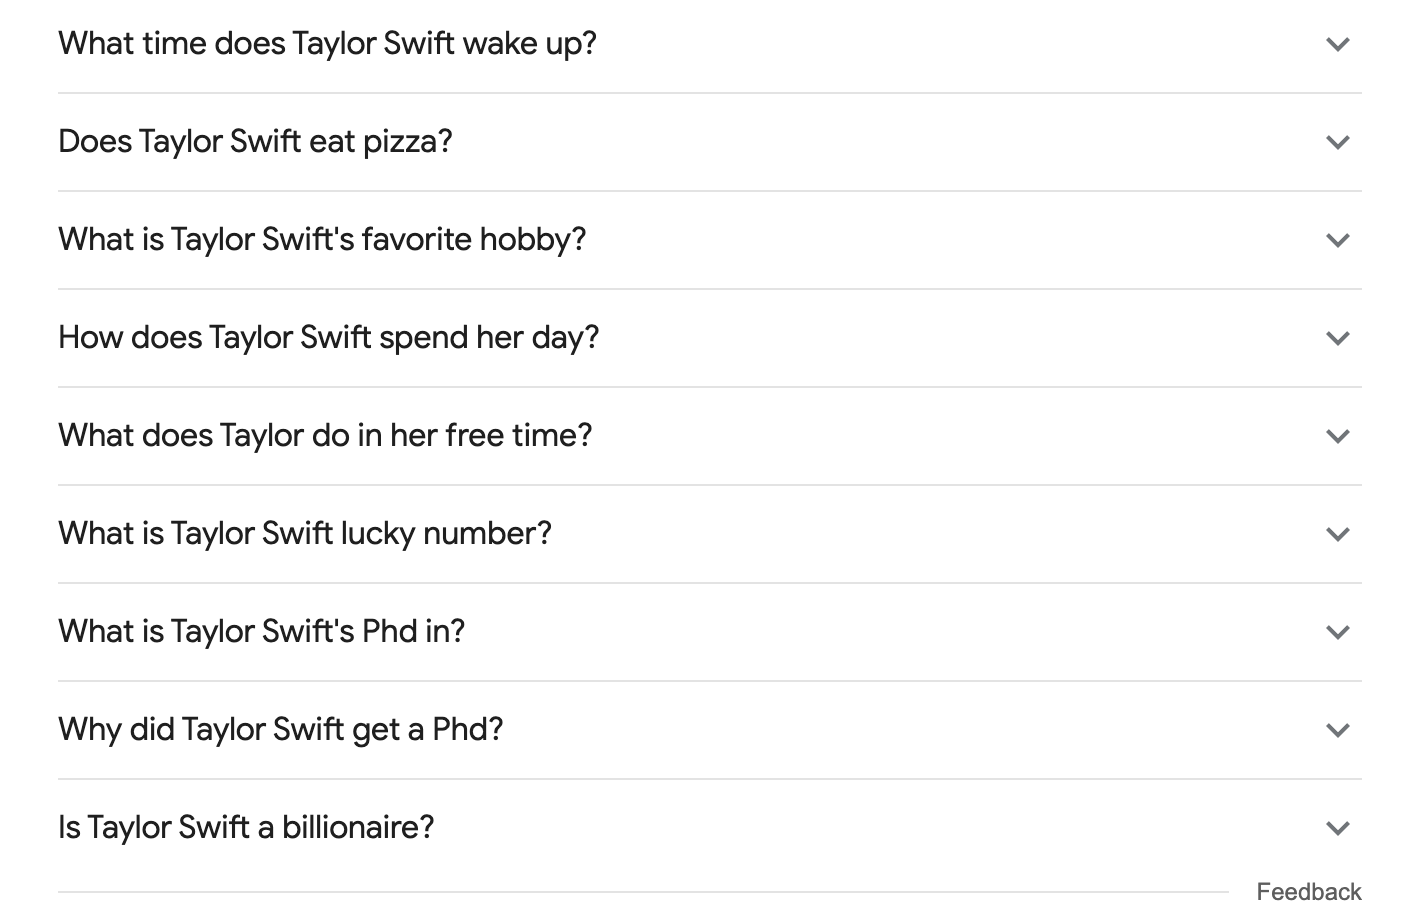 Ricerche correlate a Taylor Swift su Google